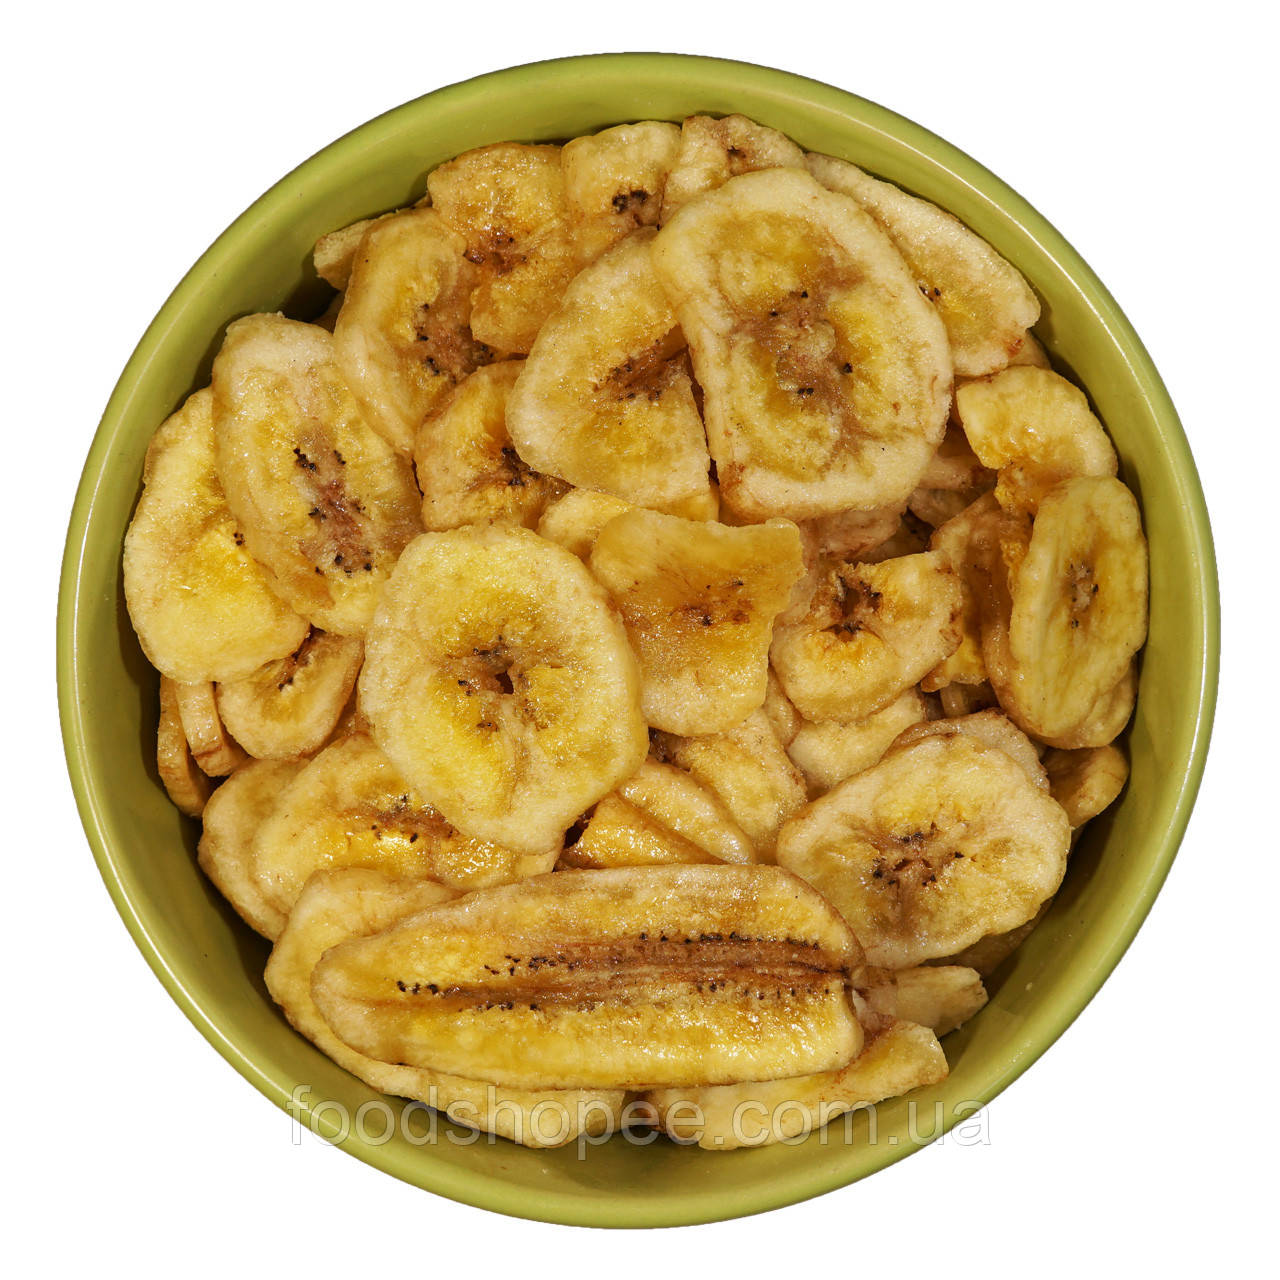 Банановые чипсы, 1 кг